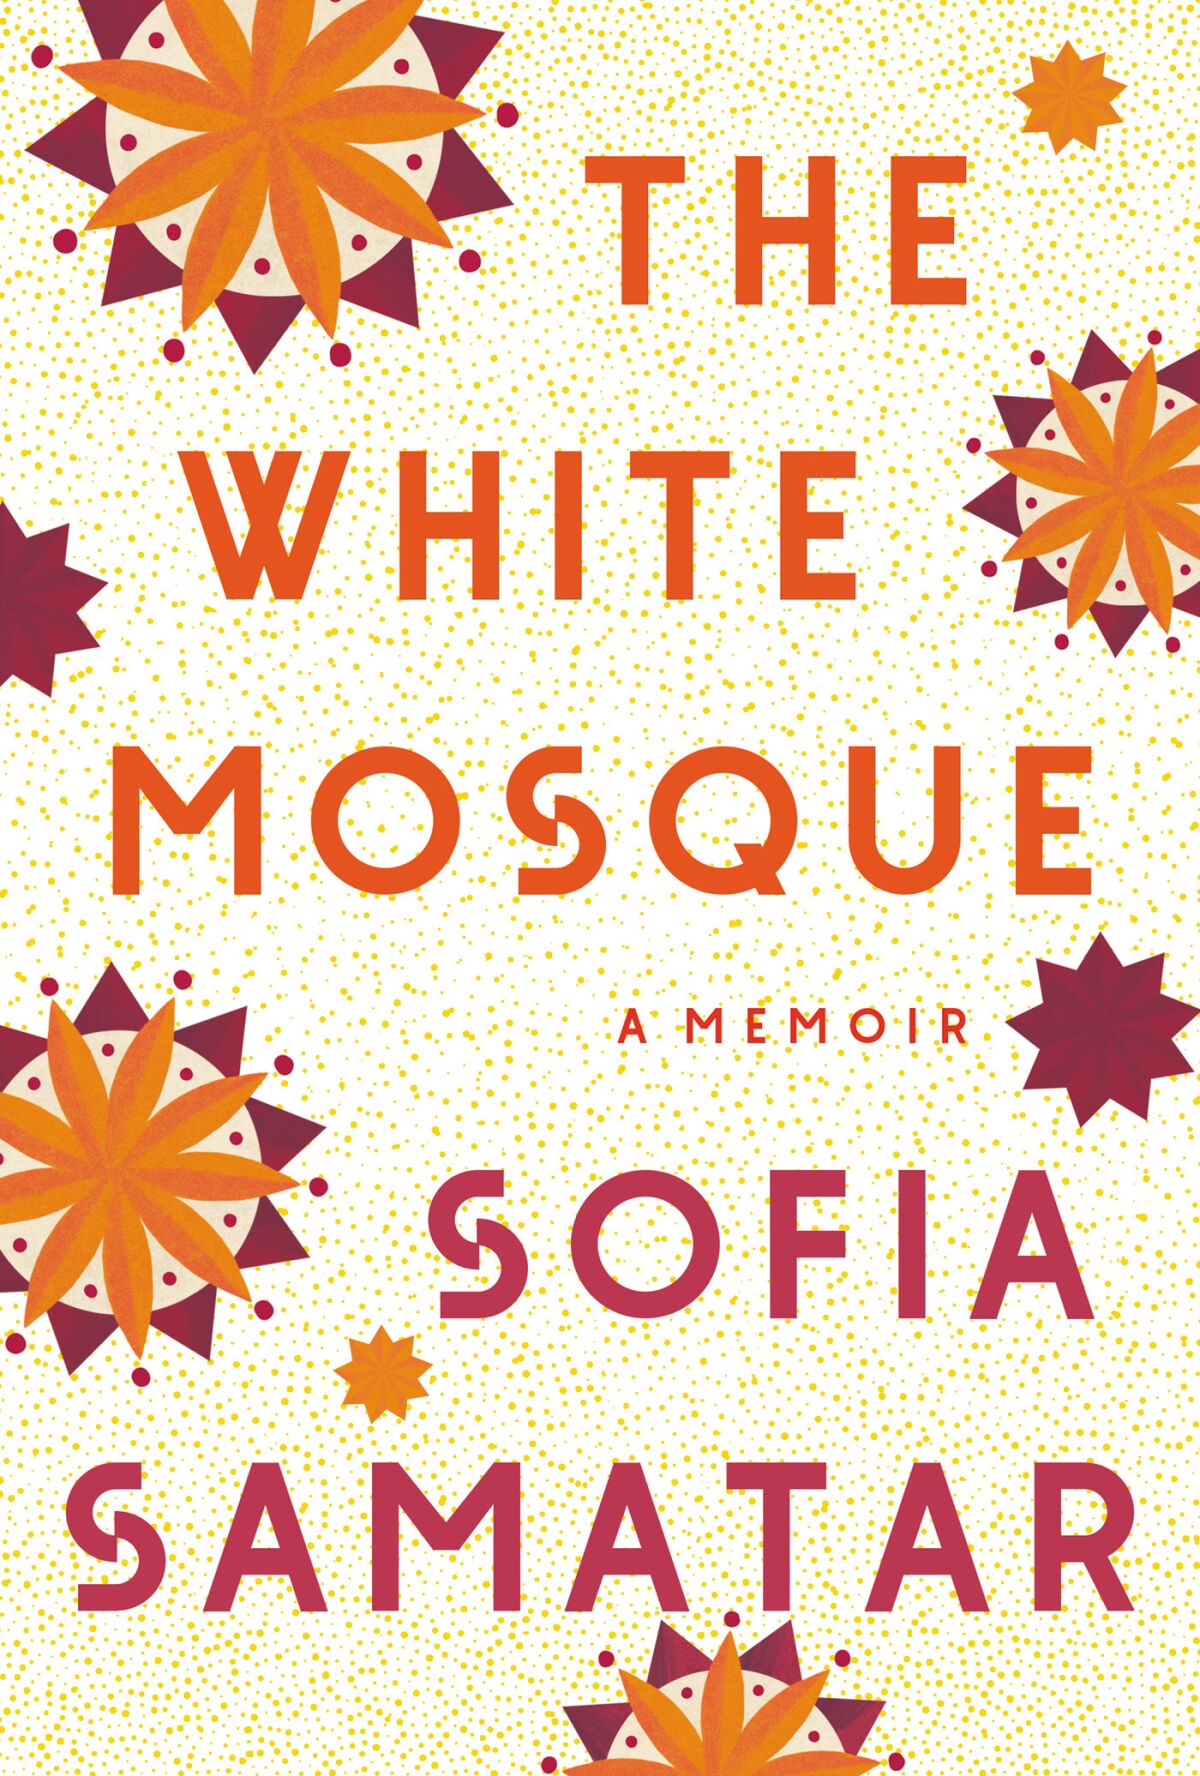 "The White Mosque" by Sofia Samatar